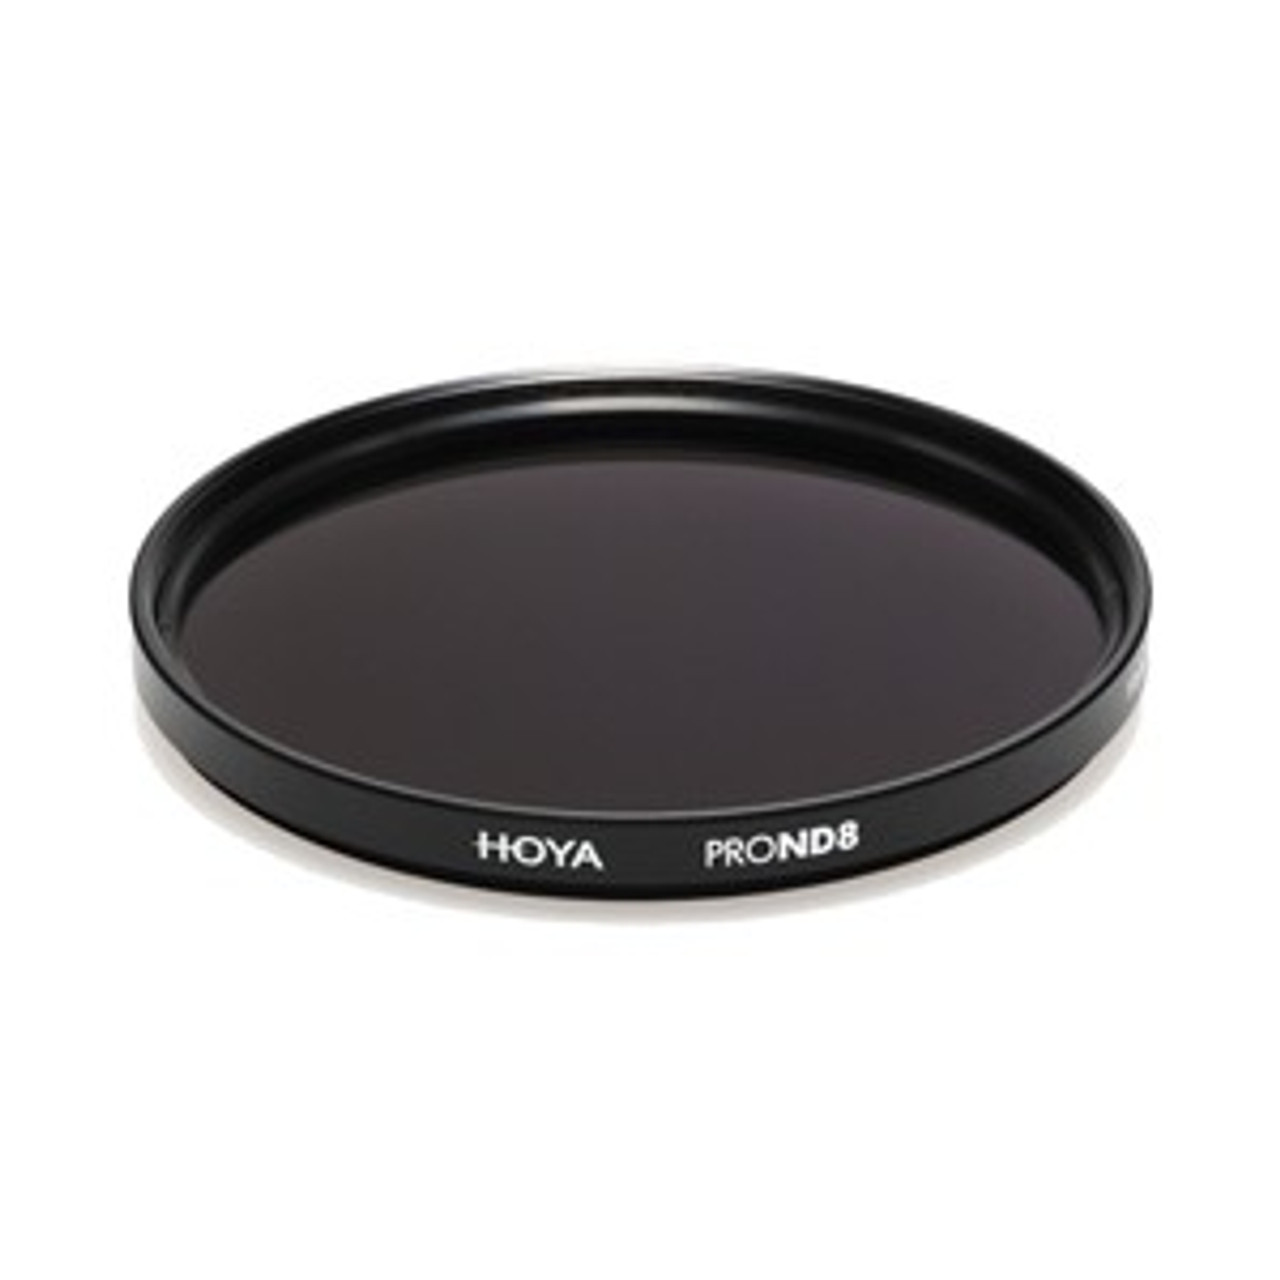 Hoya 58mm PRO ND8 Filter